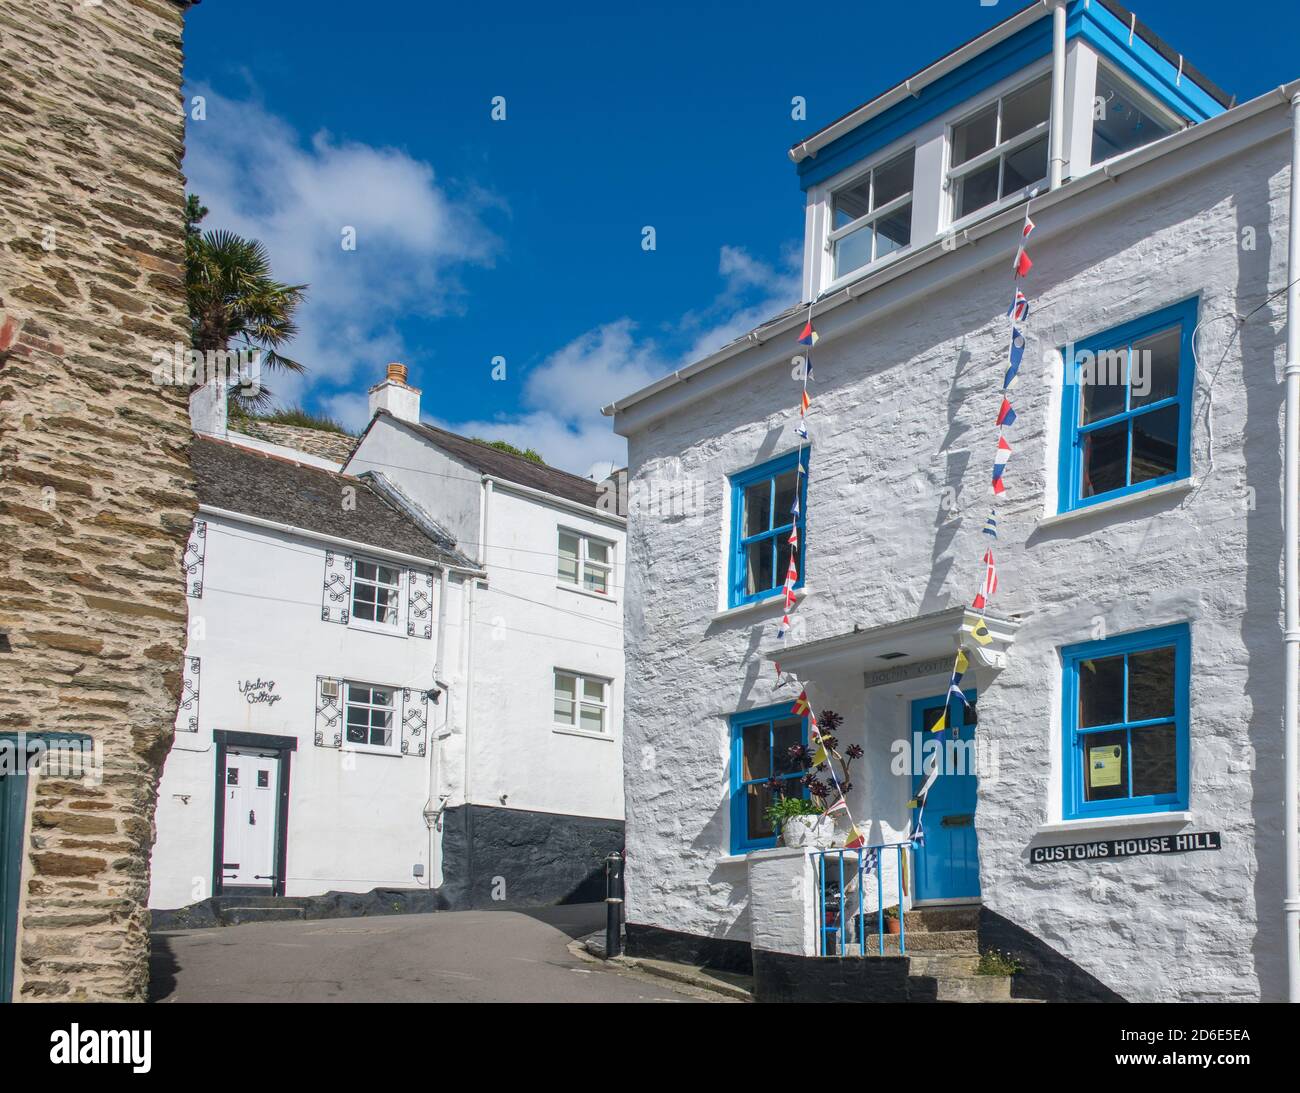 Custom House Hill Fowey Cornwall England Stock Photo